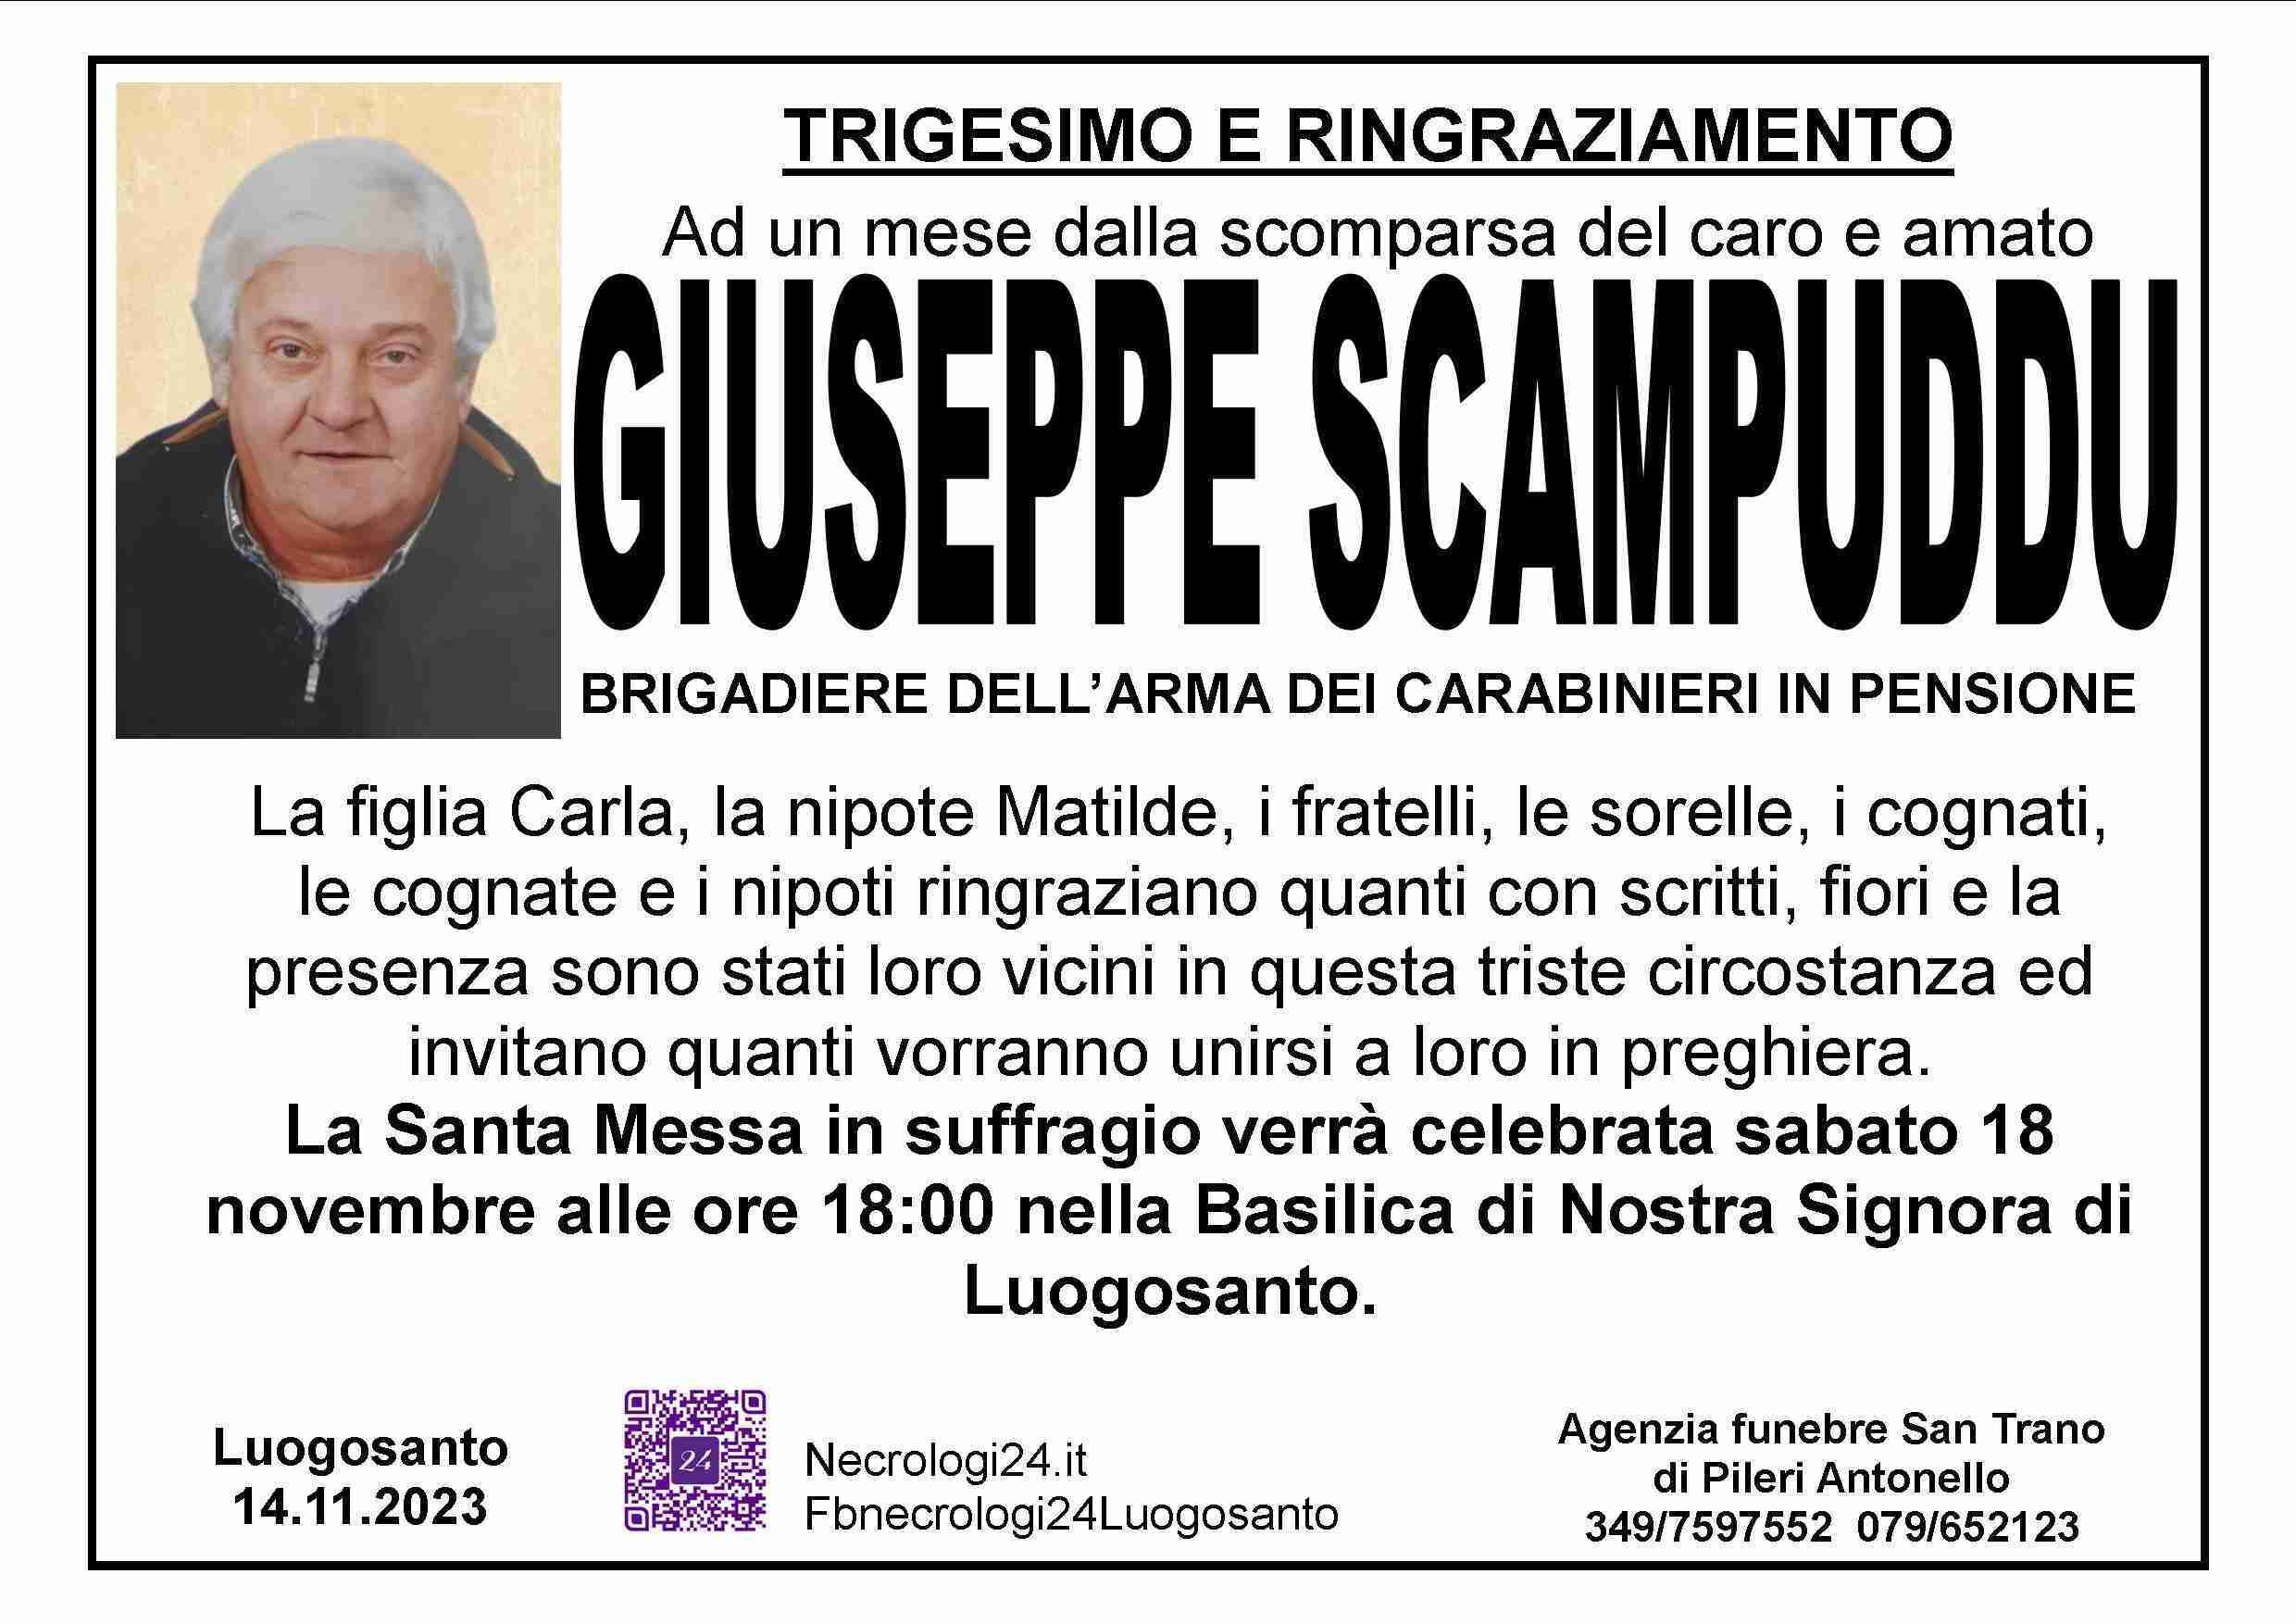 Giuseppe Scampuddu